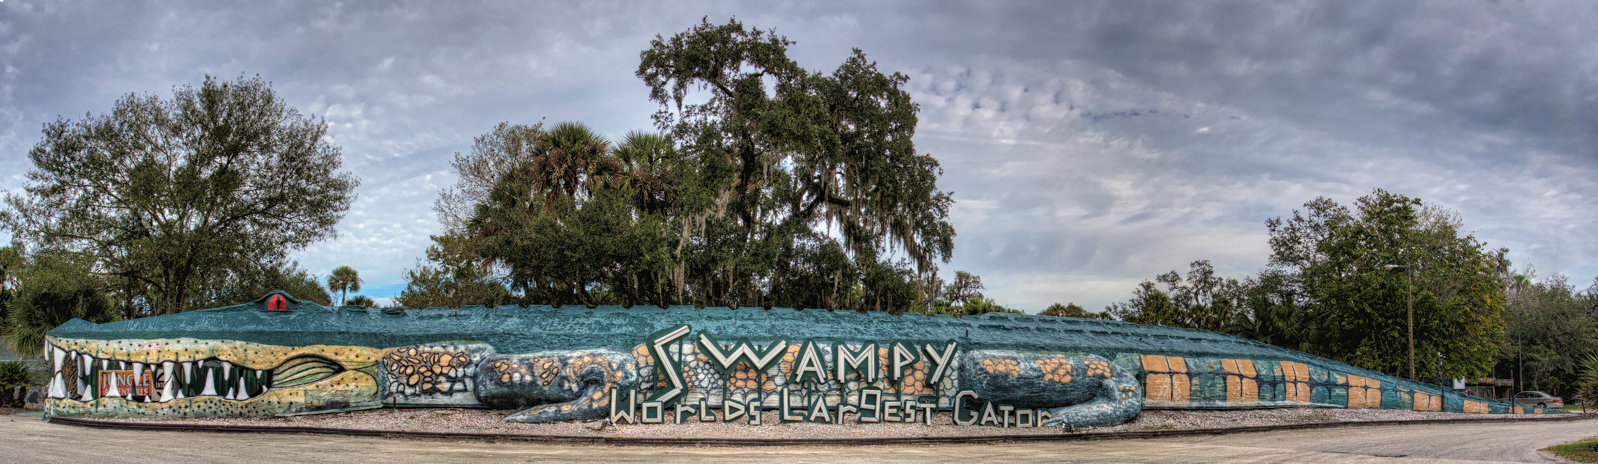 Swampy – Worlds Largest Gator, Jungle Adventures, Christmas, Florida